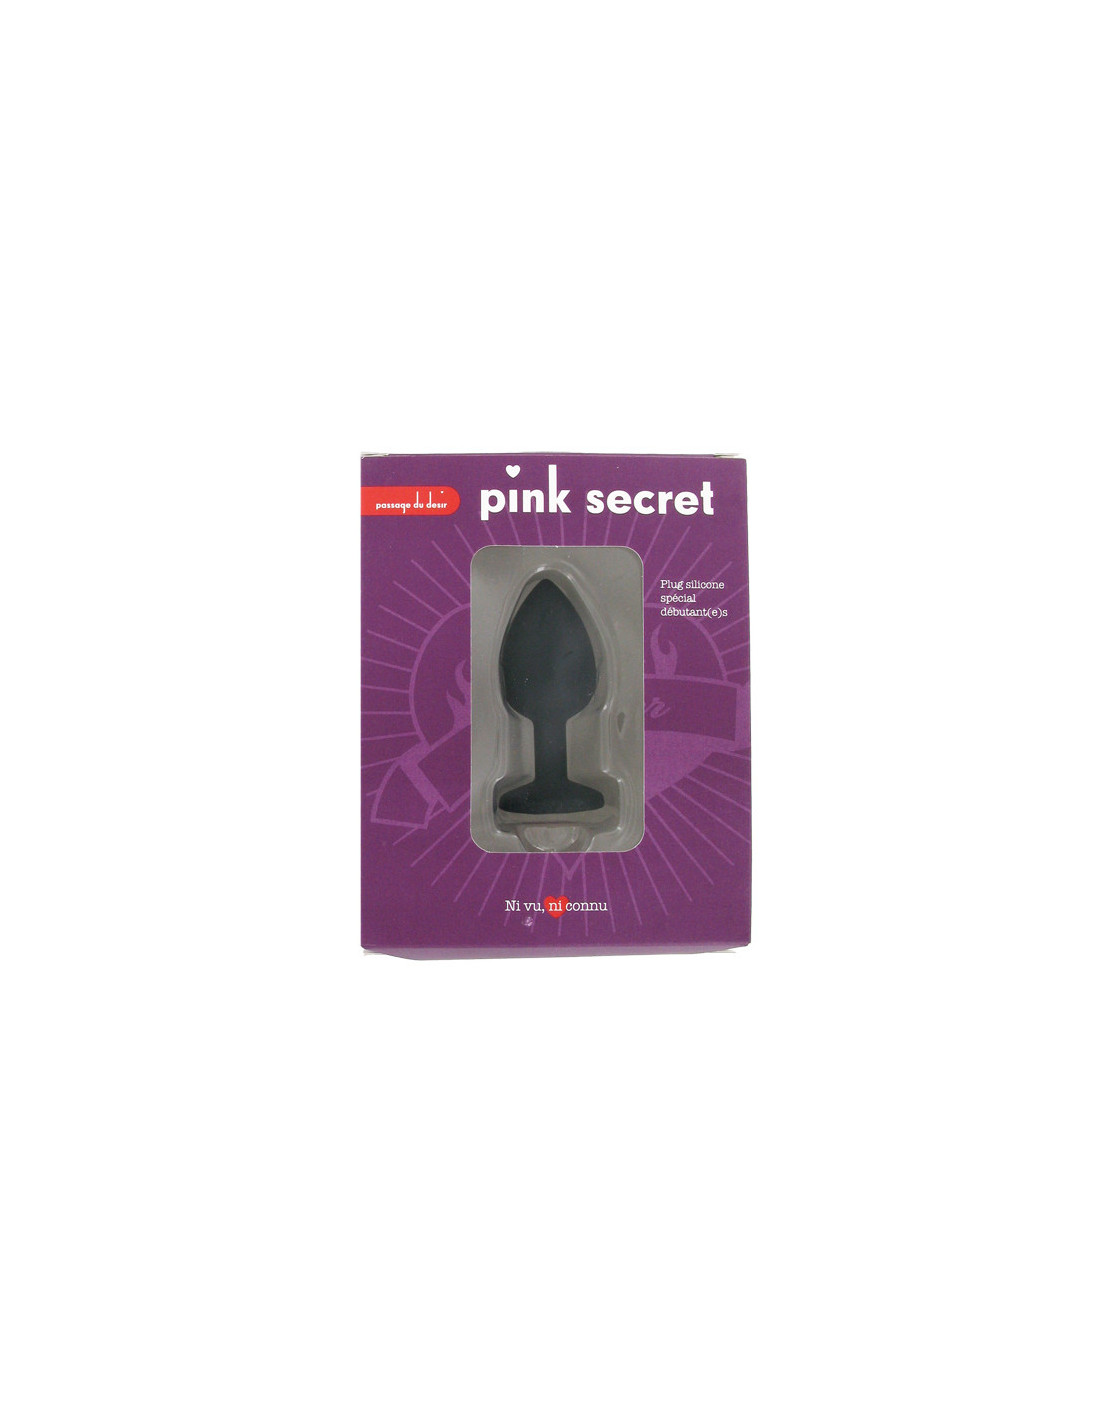 Passage du Désir Plug avec strass Pink Secret DOUYpKEV